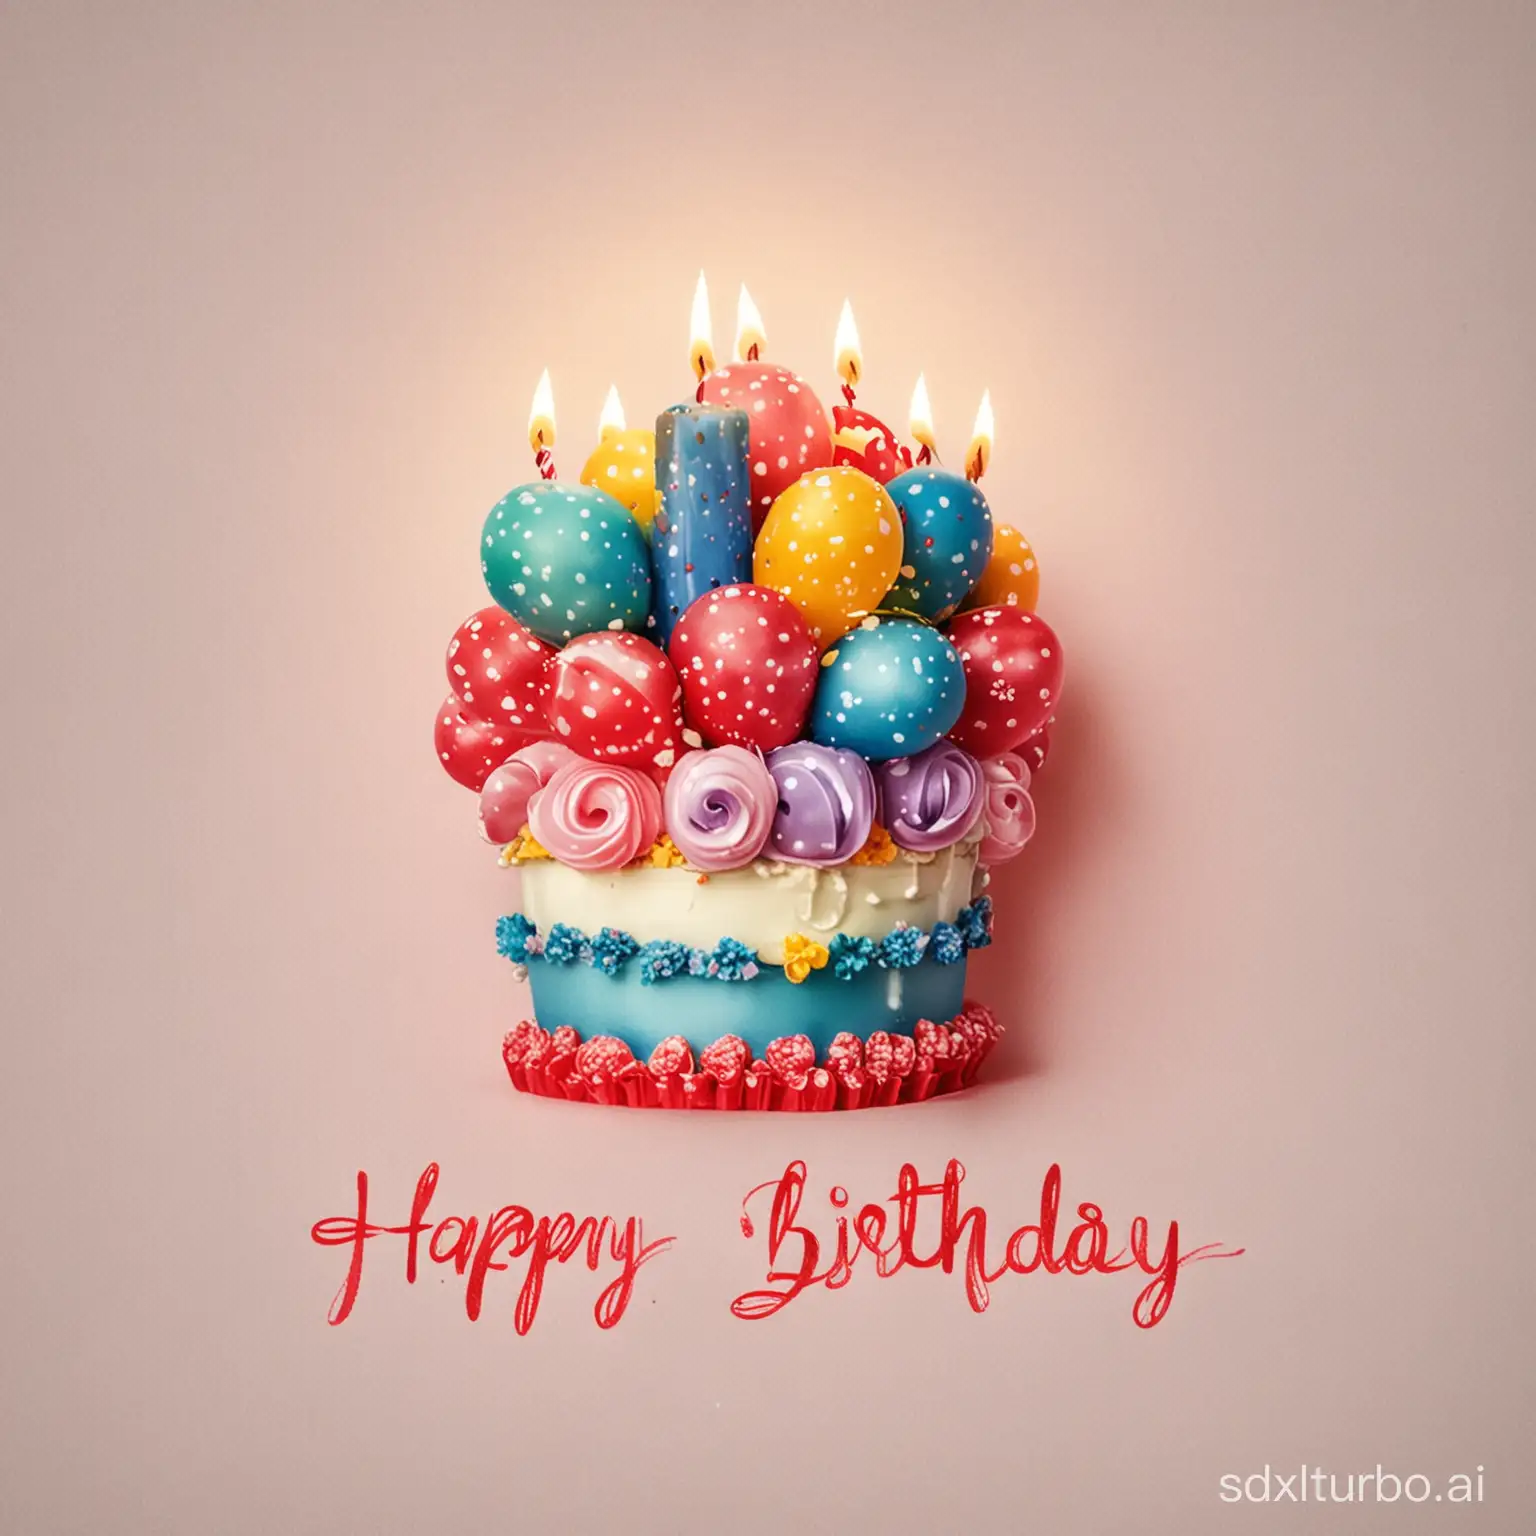 Joyful-Birthday-Celebration-with-Colorful-Balloons-and-Cake